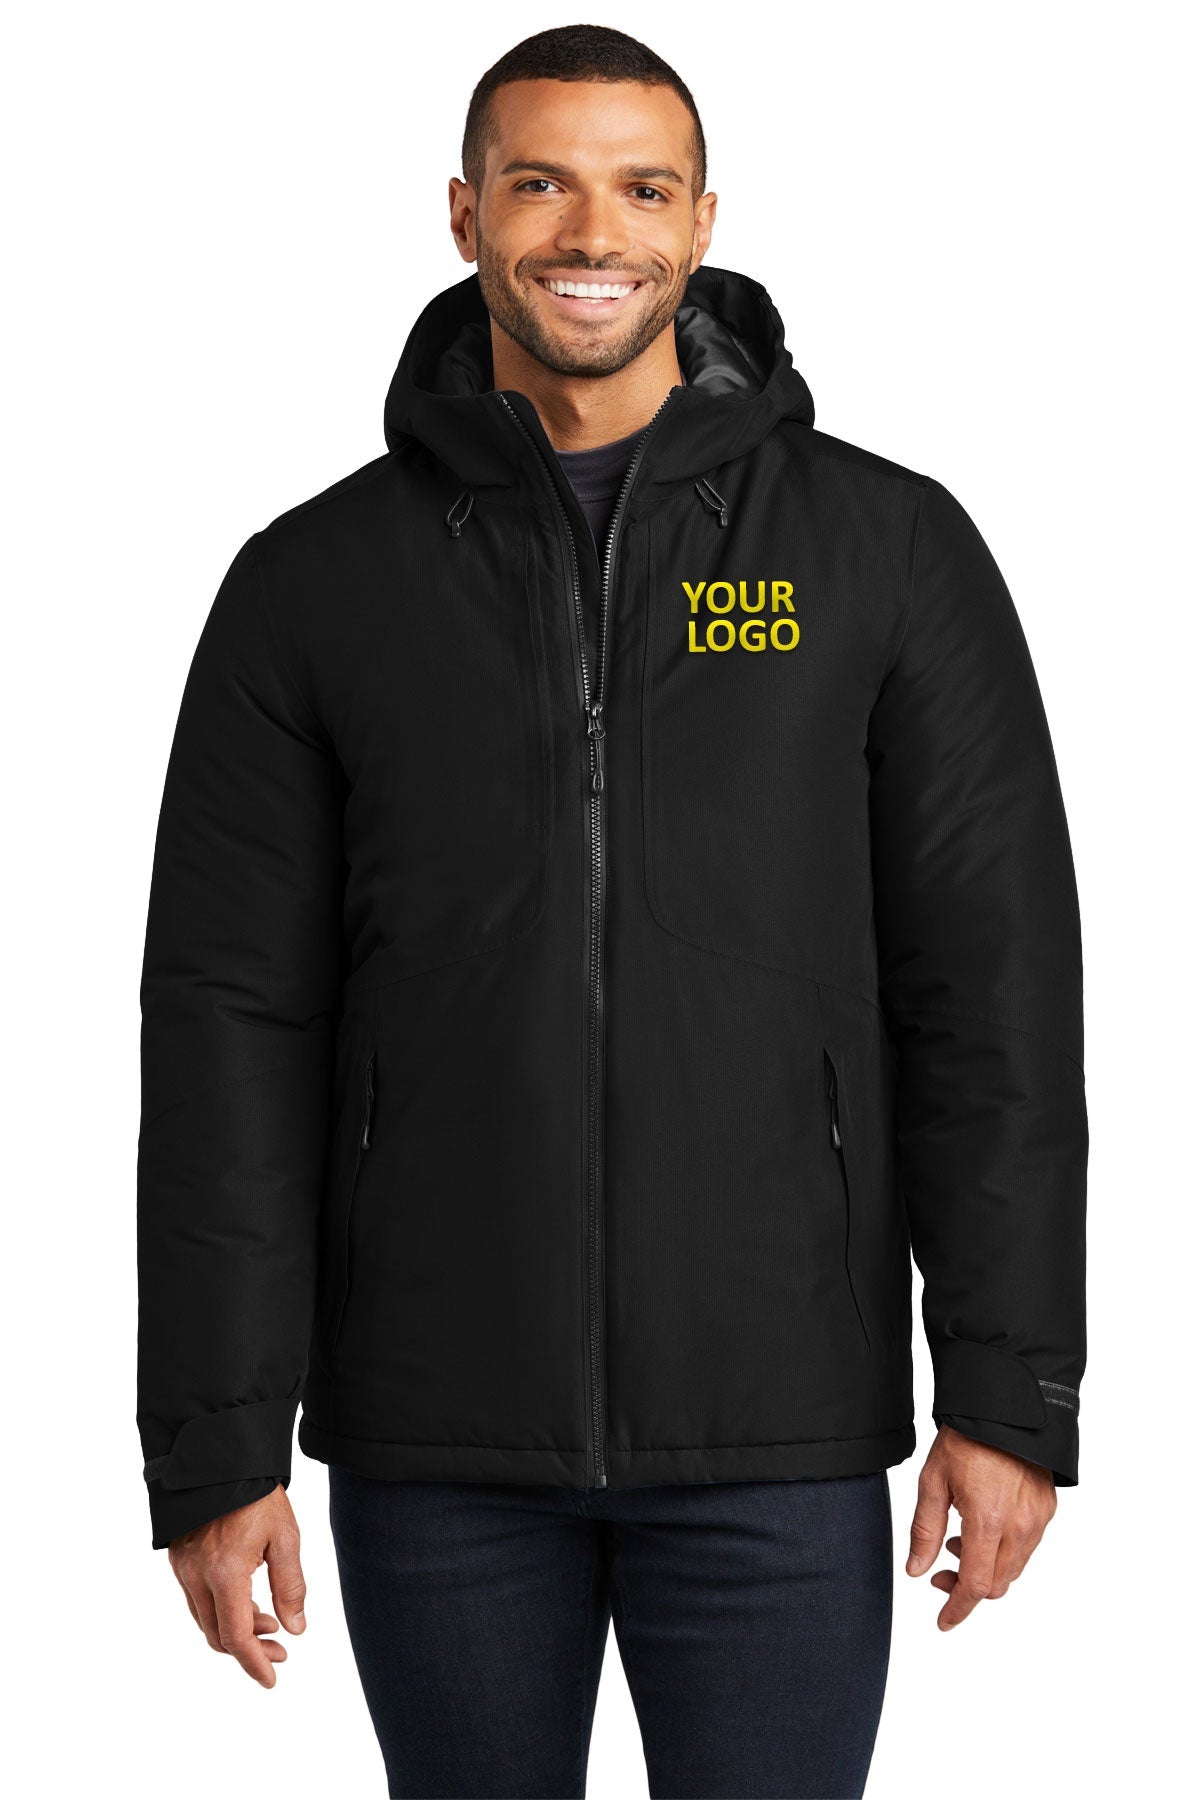 Port Authority Deep Black J362 jackets with company logo